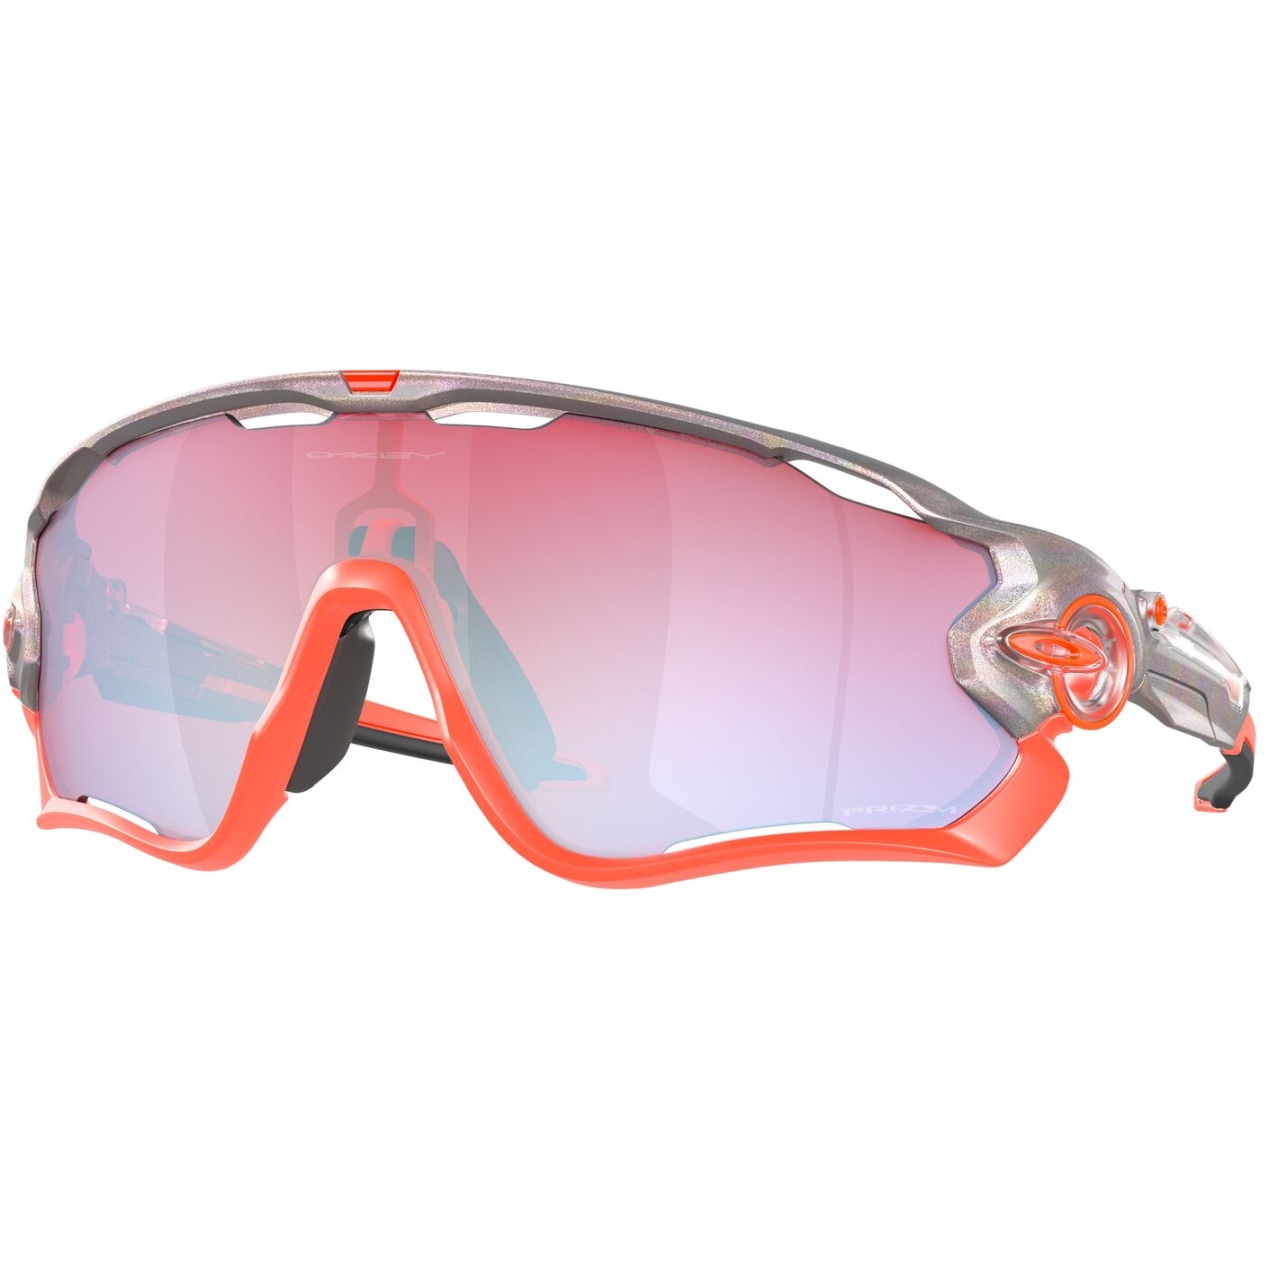 Oakley Jawbreaker - Tour de France™ Collection - Glasses - Matte 